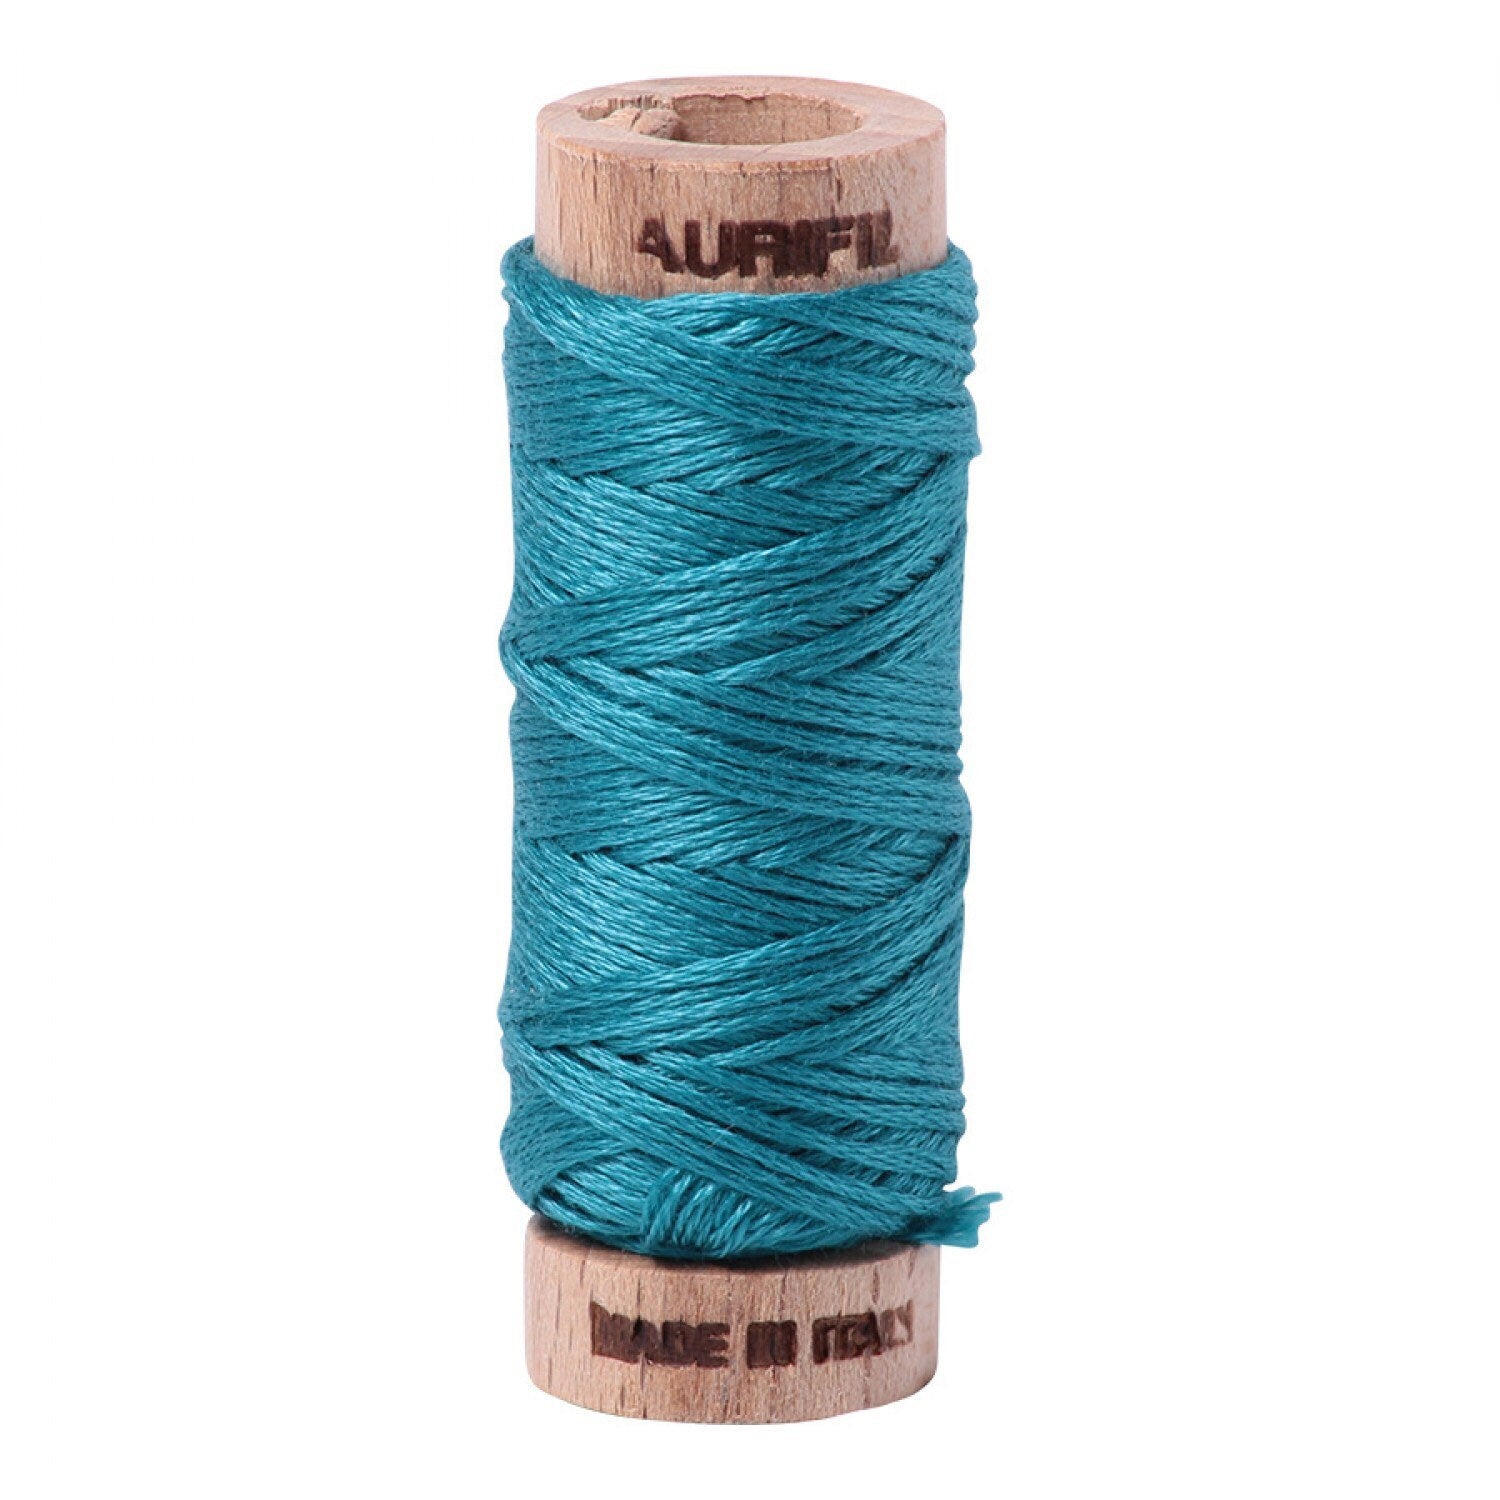 Medium Turquoise Aurifil Floss - 4182 - Aurifloss